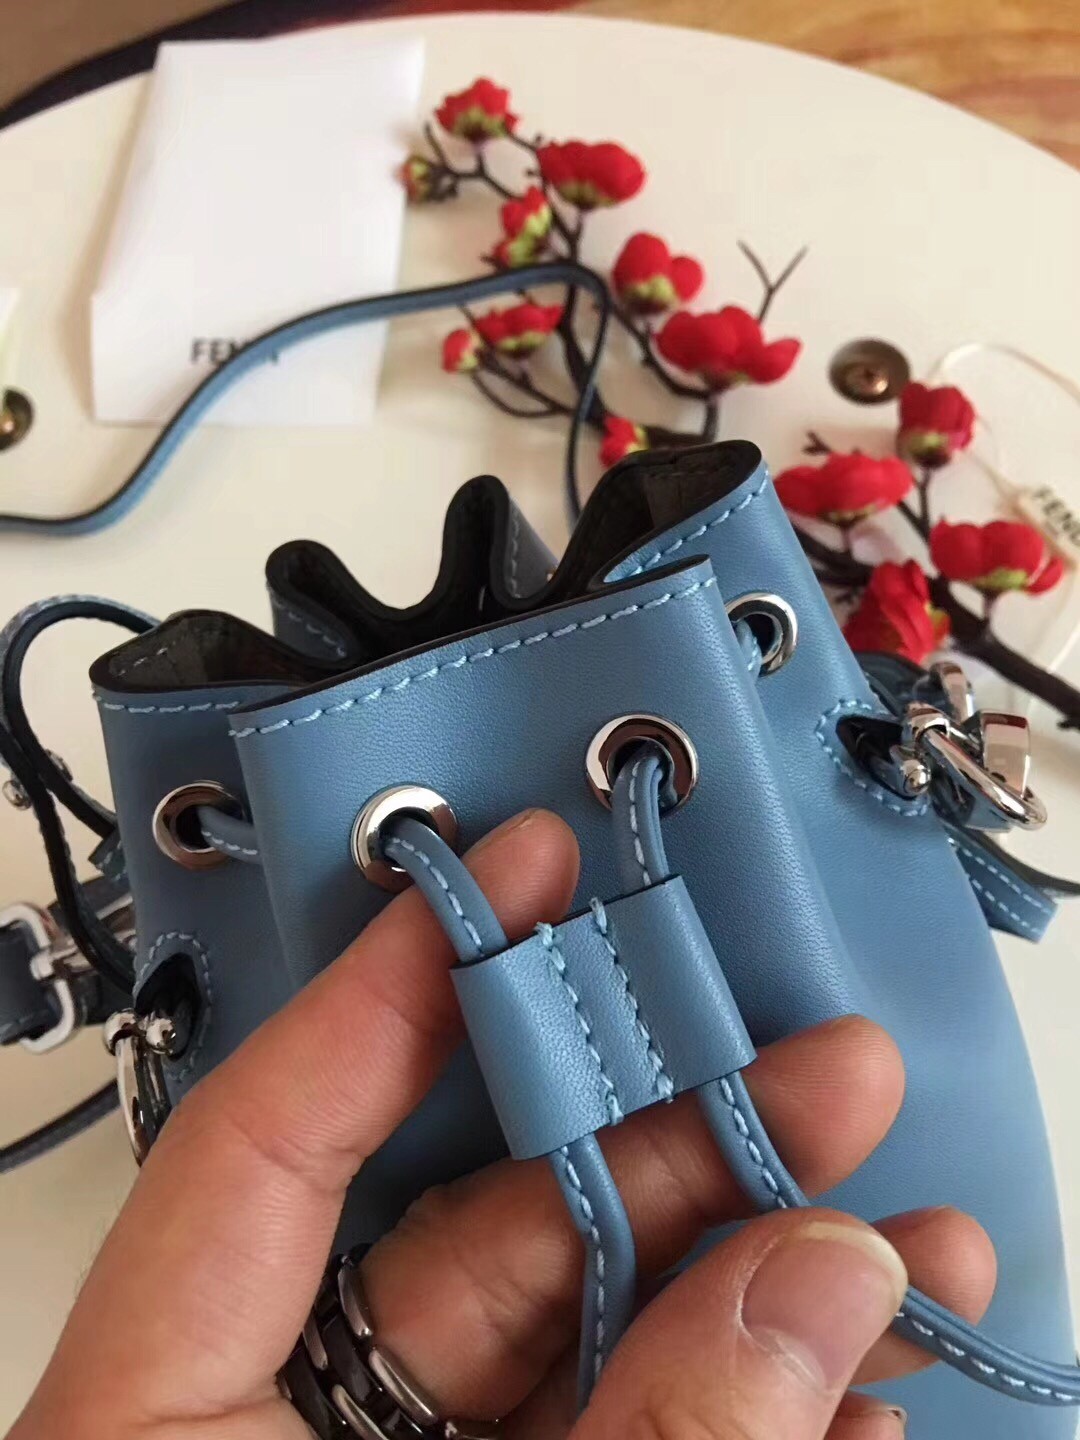 Fendi Mon Tresor Mini Bucket Bag In Blue Calfskin 664